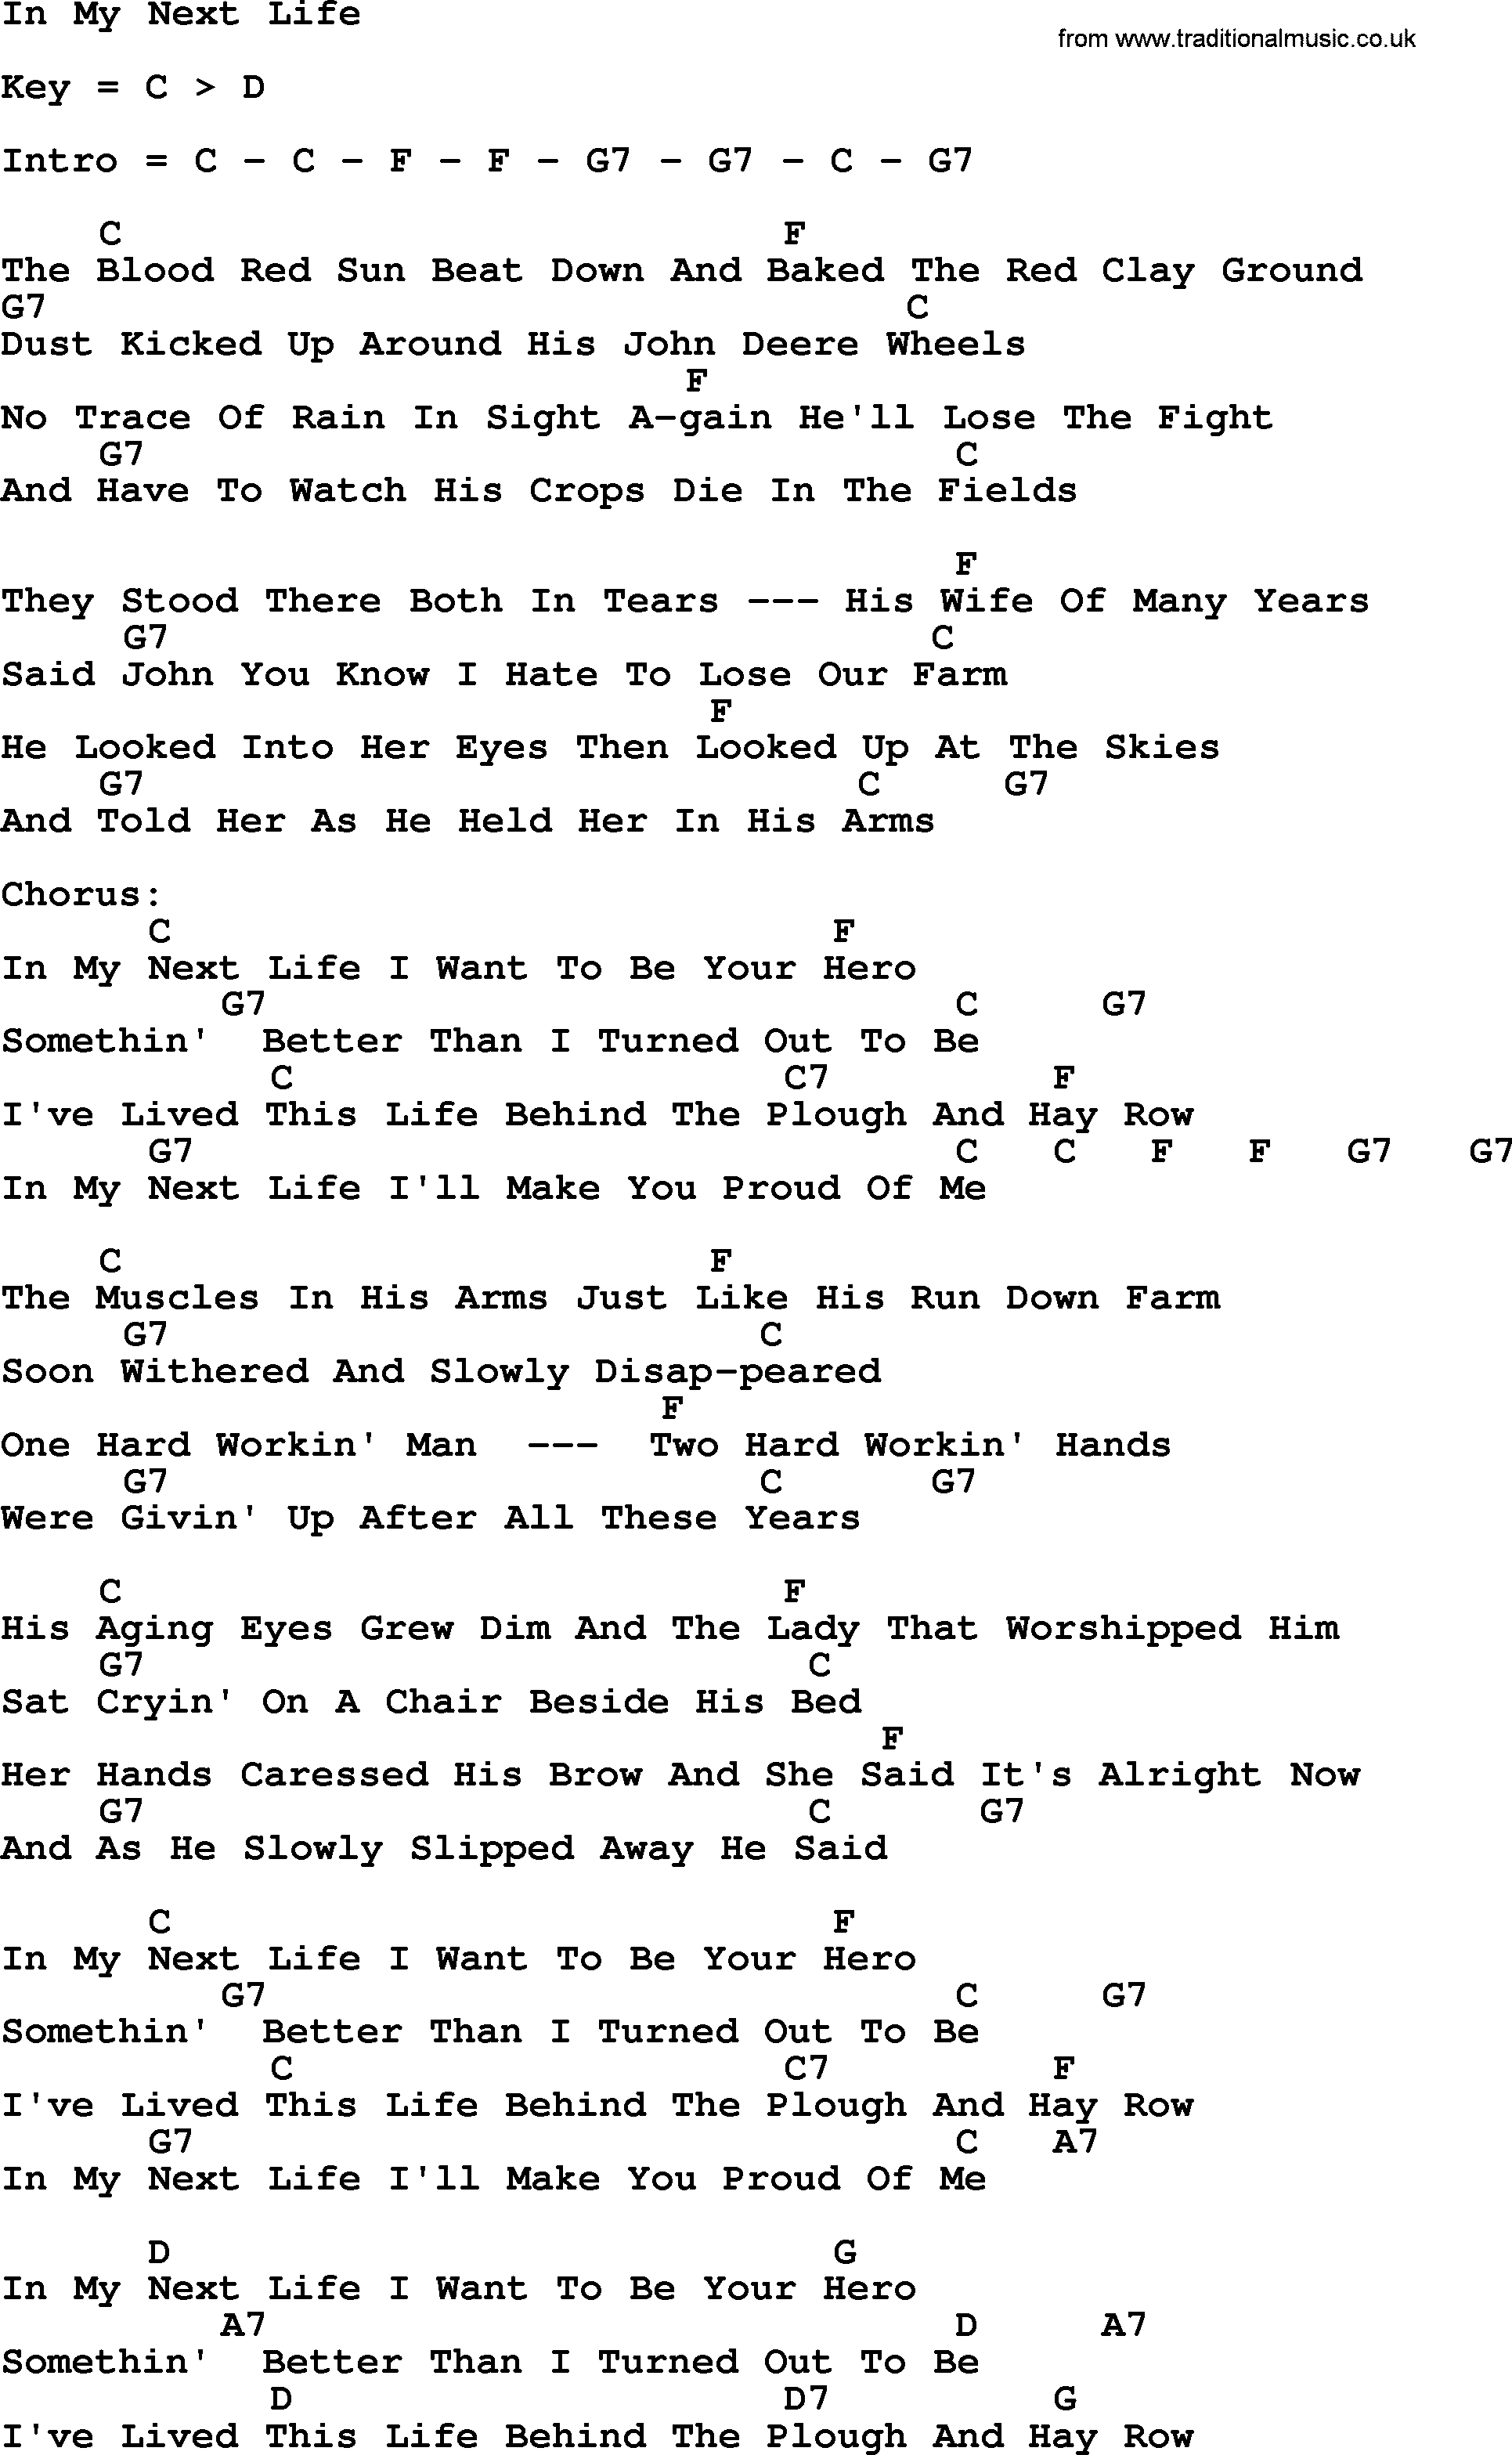 Merle Haggard song: In My Next Life, lyrics and chords